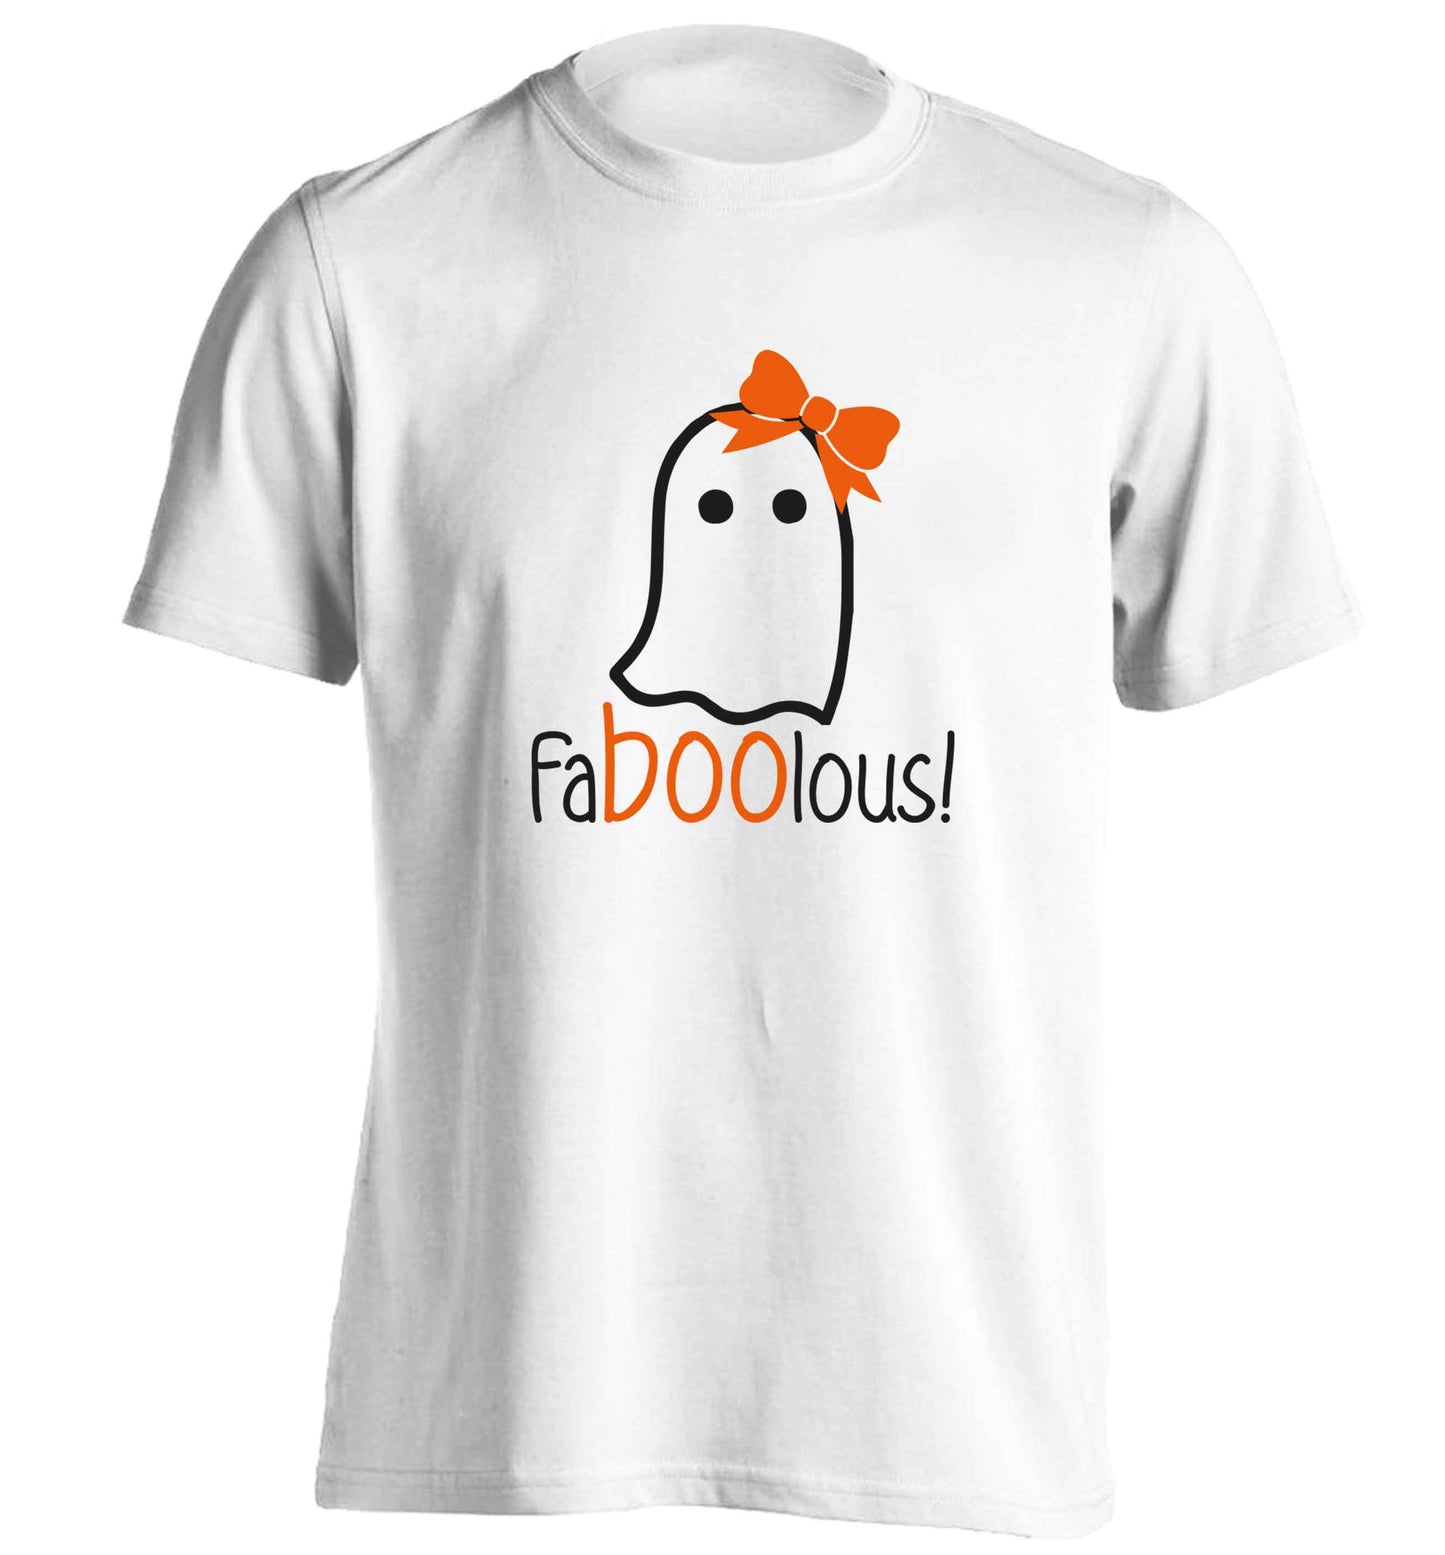 Faboolous ghost adults unisex white Tshirt 2XL